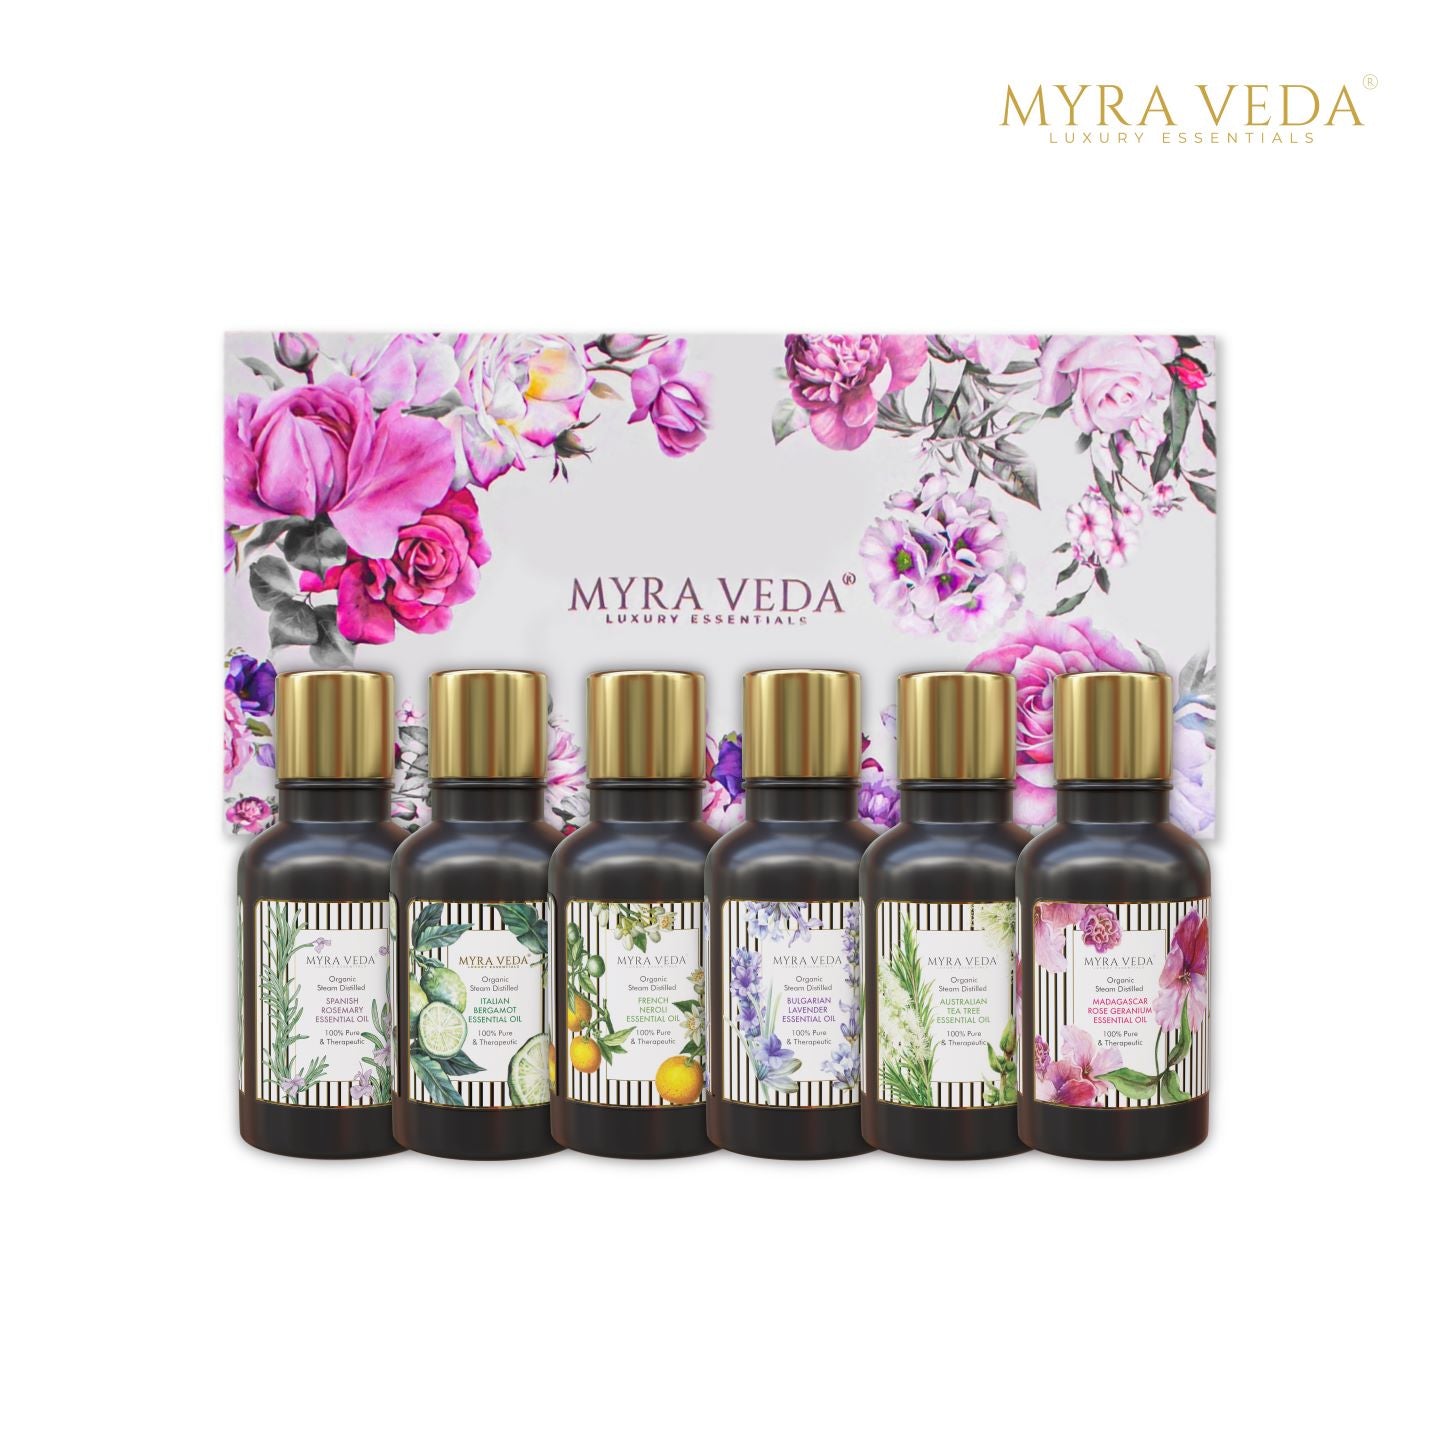 Myra Veda 6 Essential Oil Kit